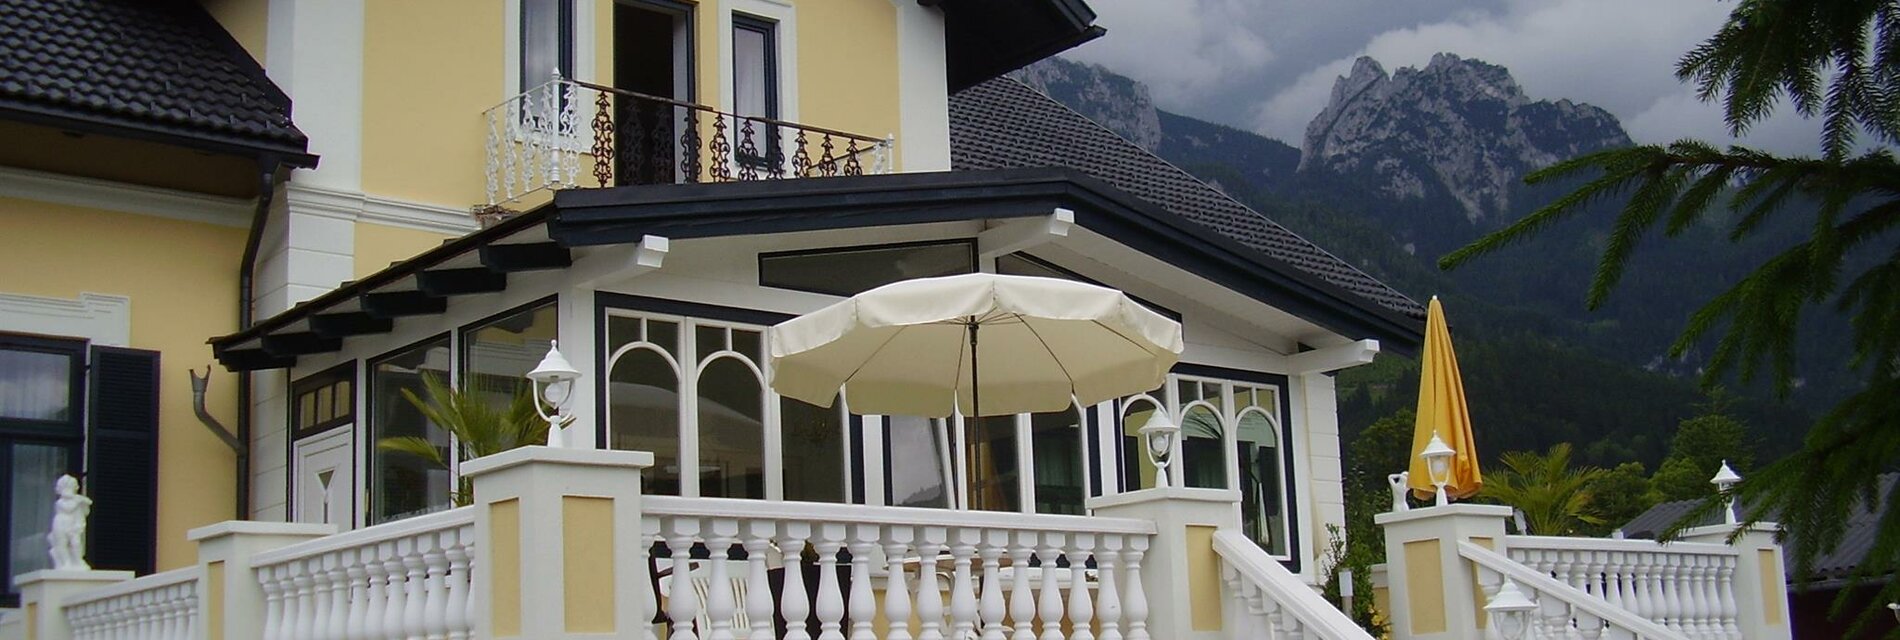 Villa Elisabeth in Admont